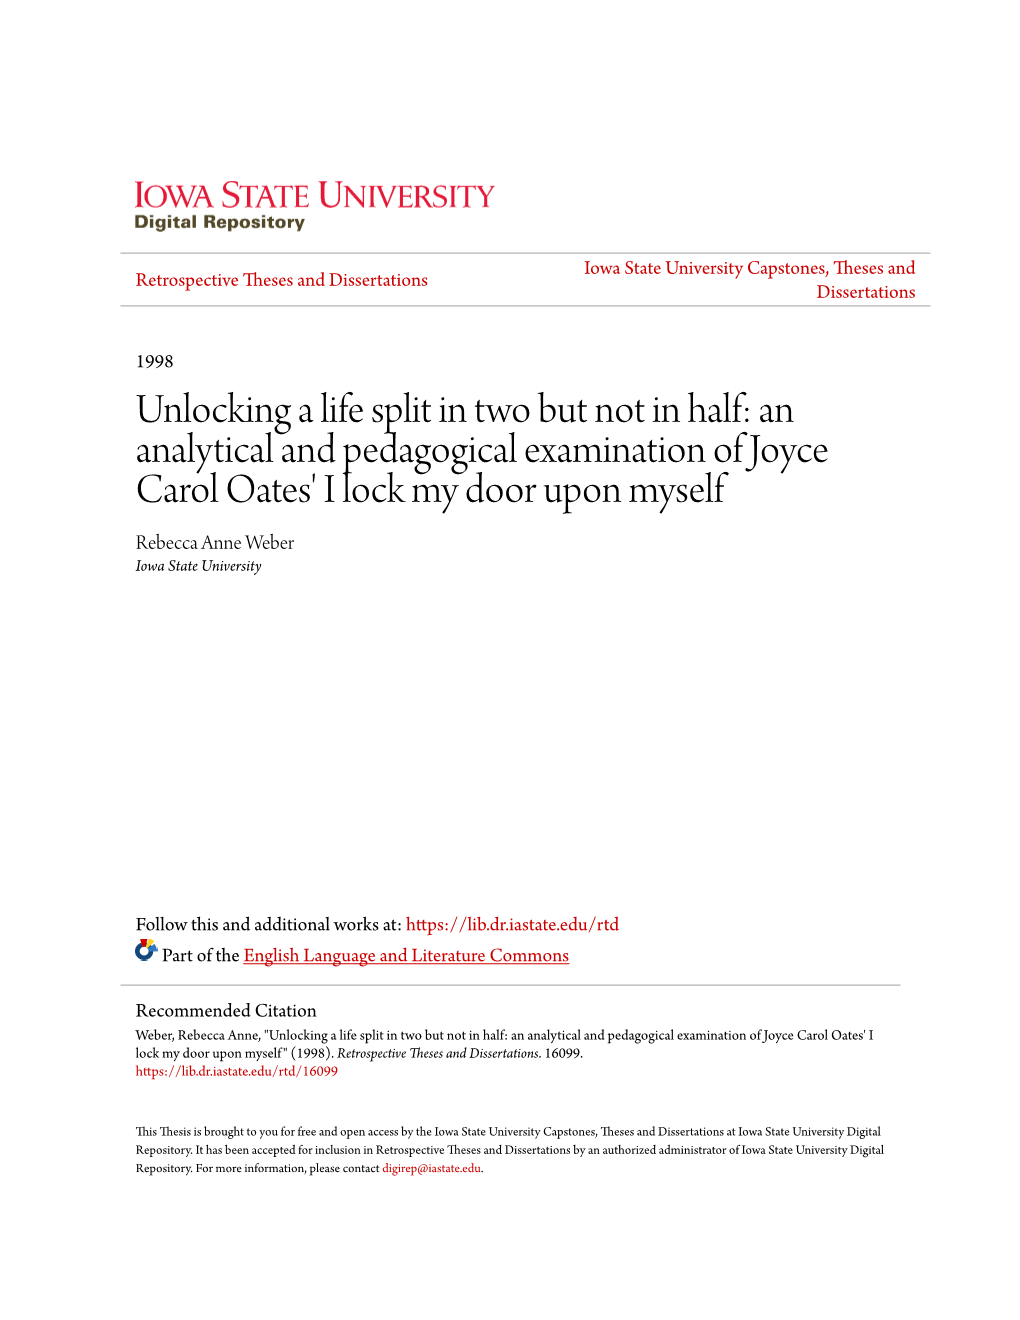 An Analytical and Pedagogical Examination of Joyce Carol Oates' I Lock My Door Upon Myself Rebecca Anne Weber Iowa State University